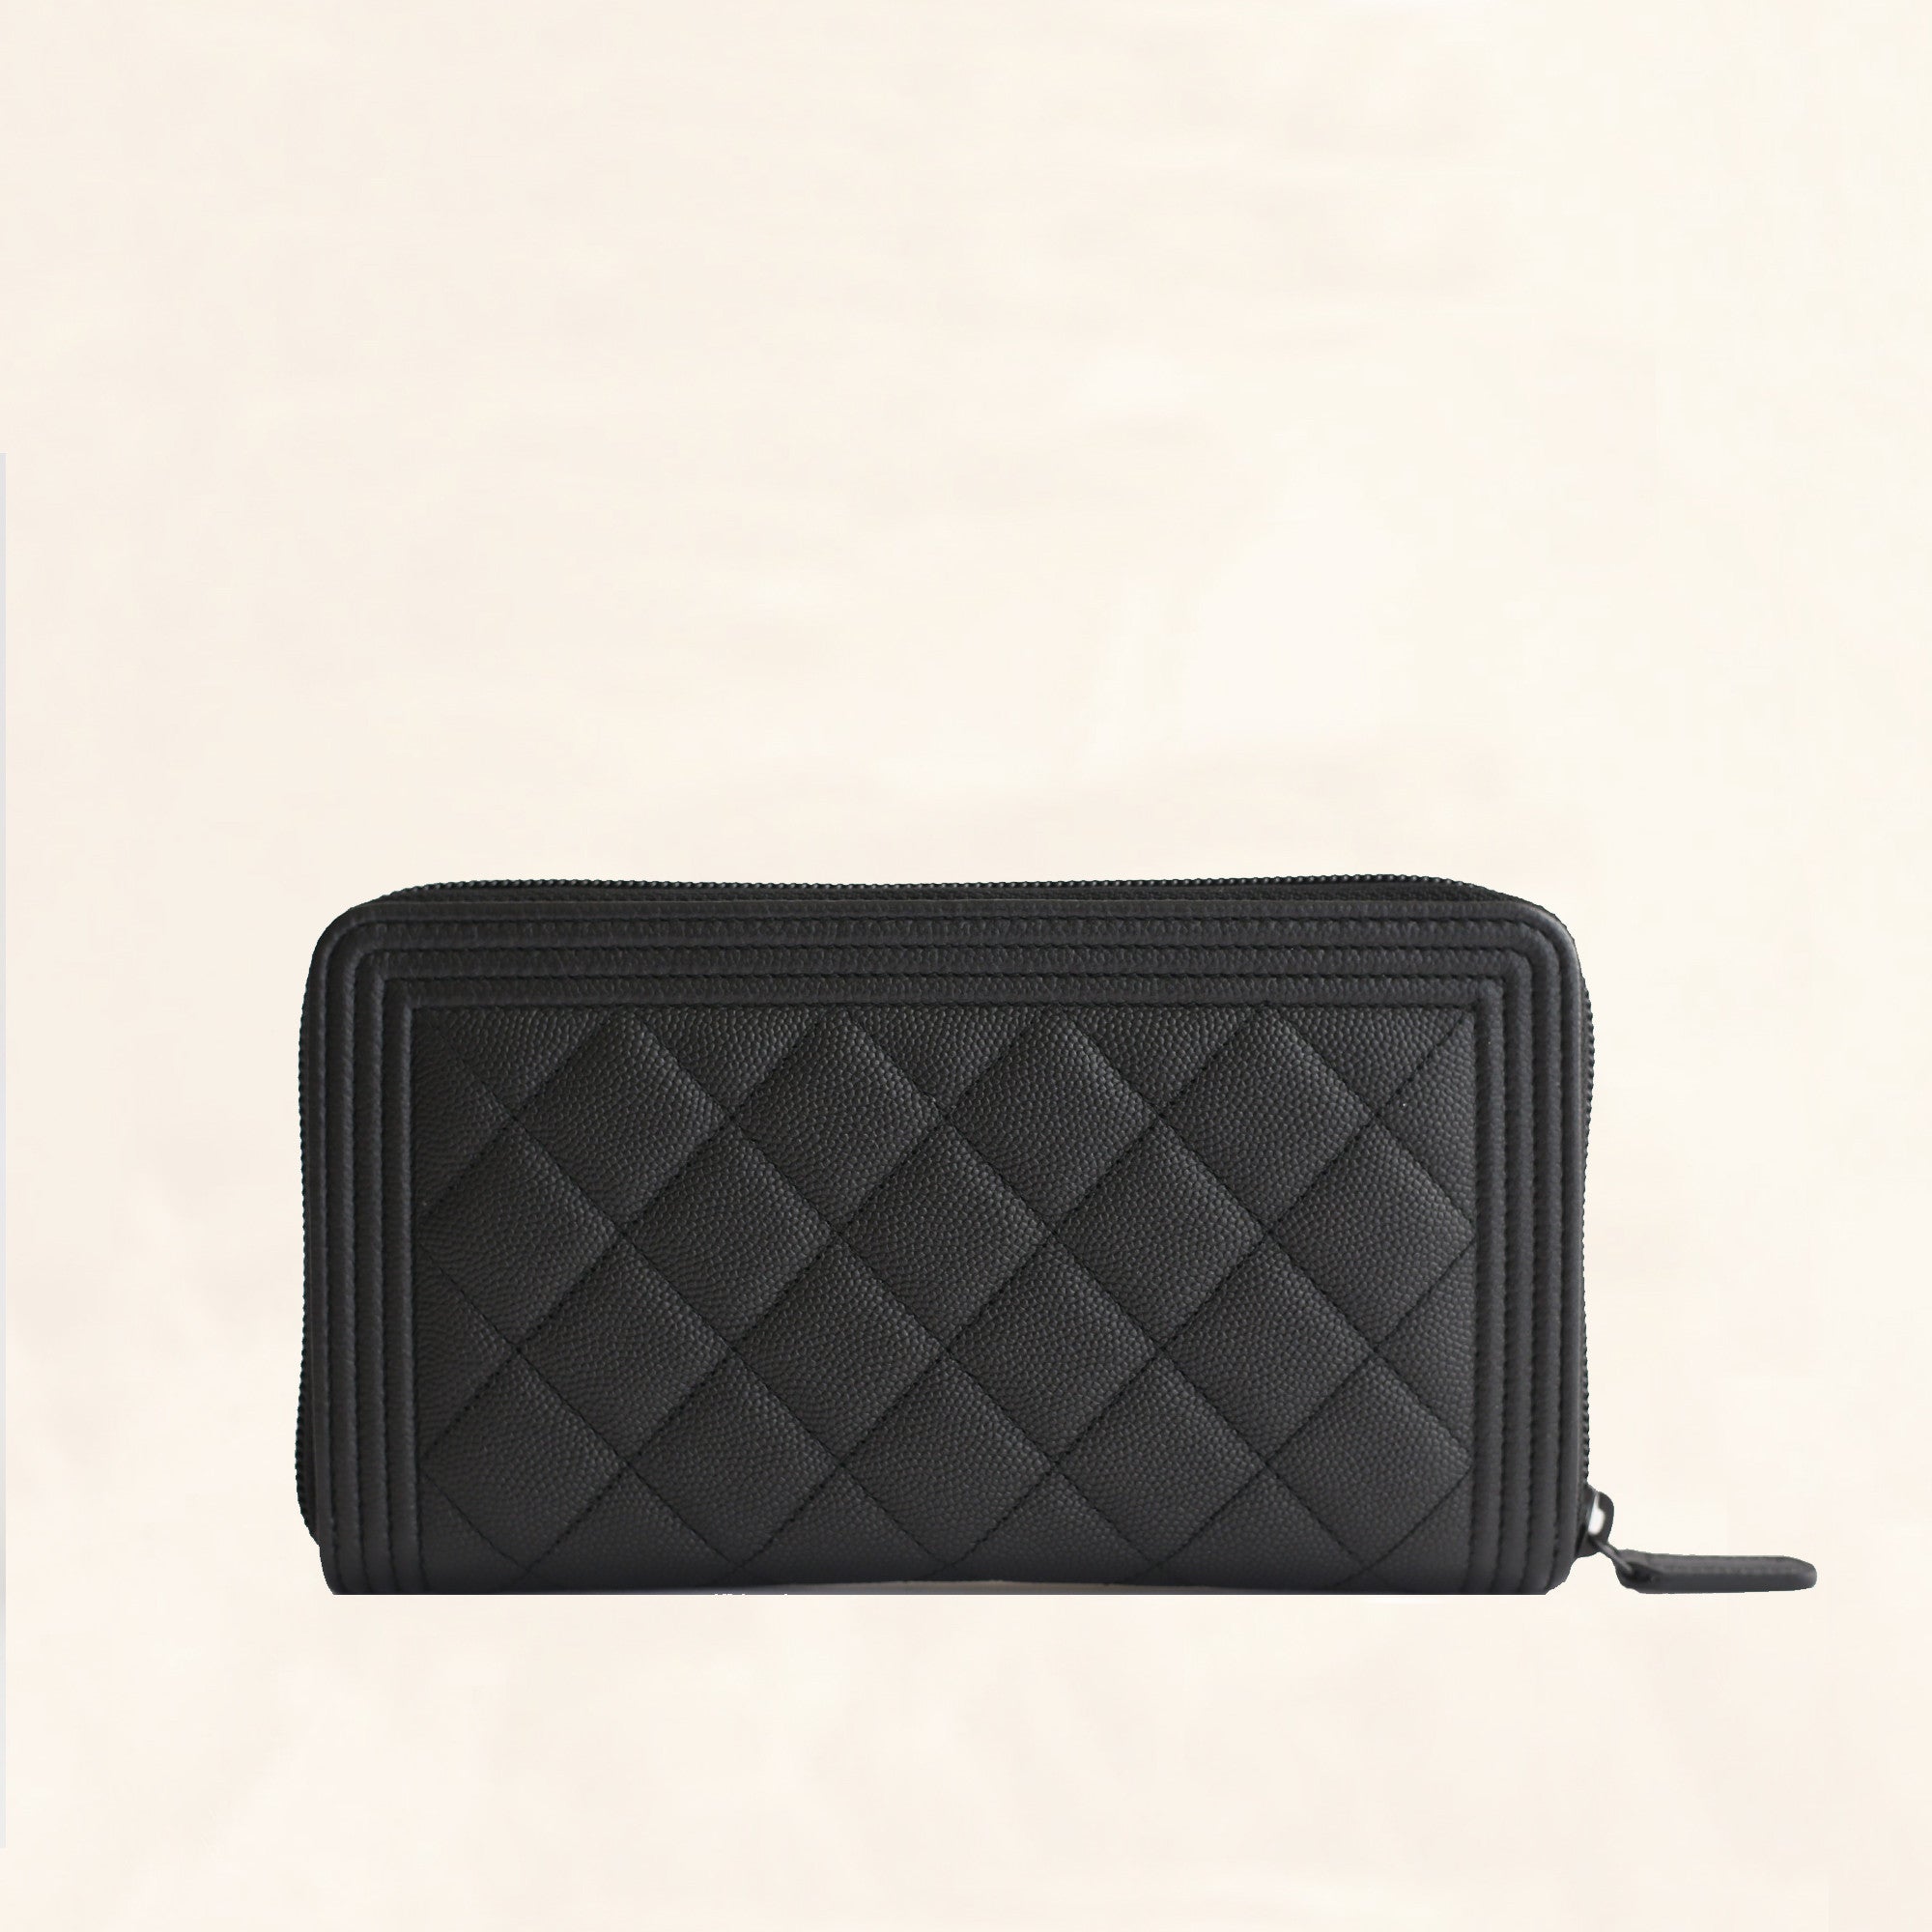 Chanel Dark Royal Blue Caviar Leather CC Logo L-Gusset Zip Wallet Long 1028c8